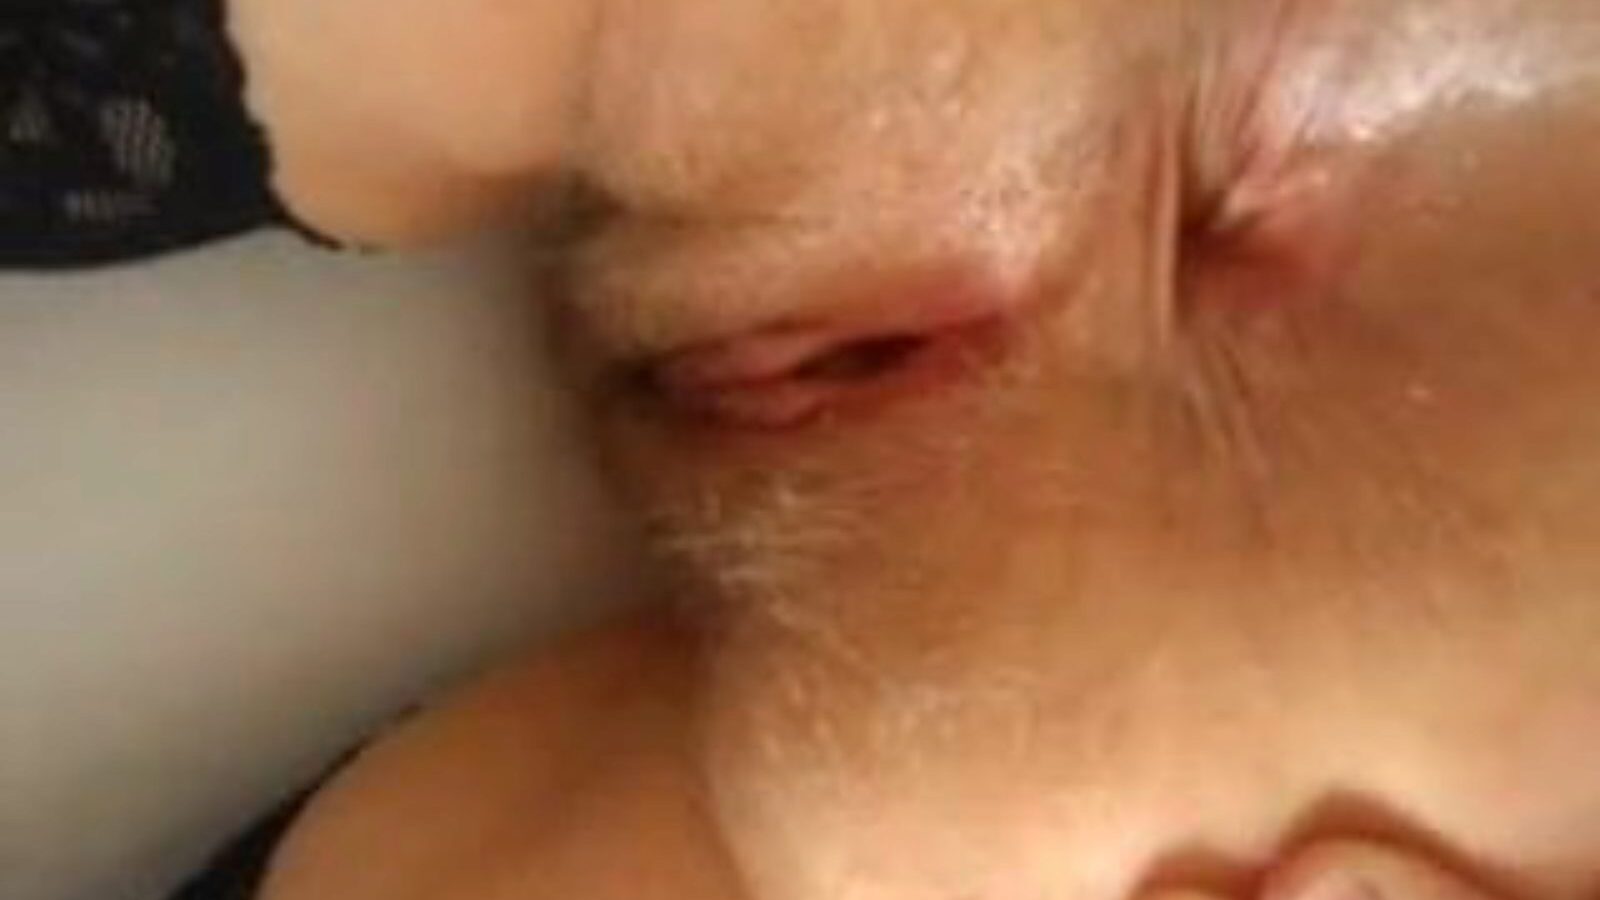 spread ass: spread open & mobile ass porn video - xhamster titta på spread ass tube bang-out filmscen gratis på xhamster, med den häpnadsväckande uppskattningen av spread open mobile ass & open asshole porno episodsekvenser